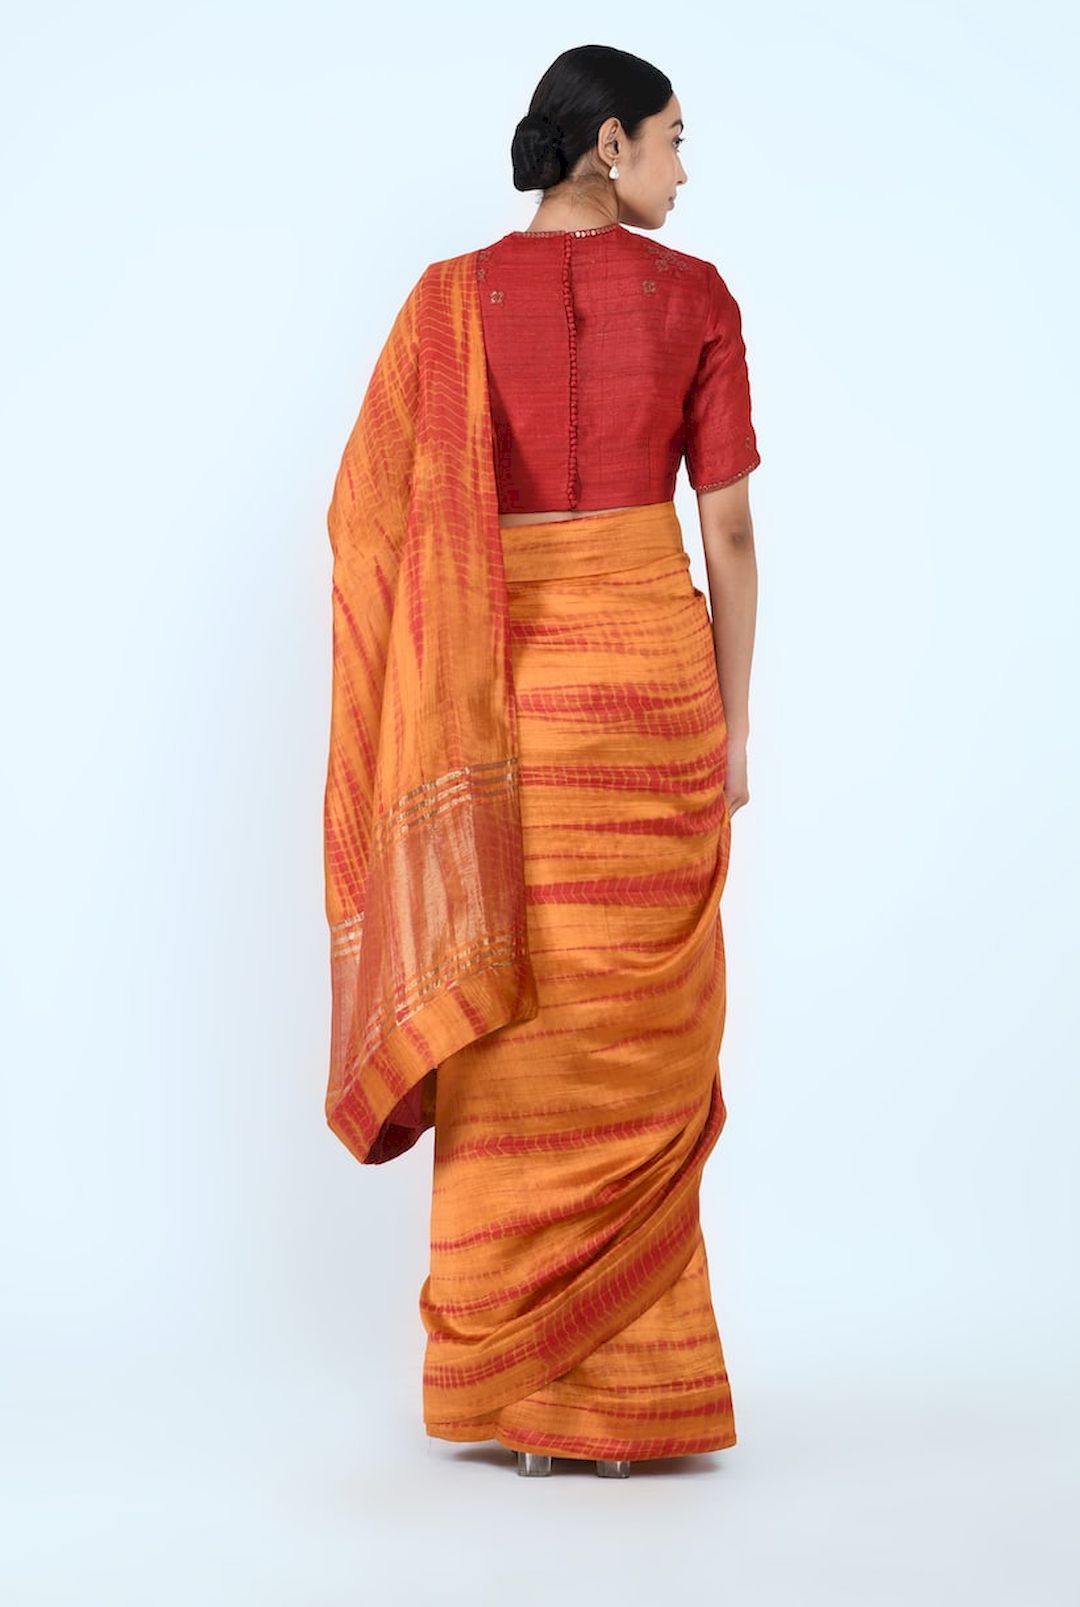 Tie And Dye Silk Sari (Orange/Maroon) - Prashant Chouhan